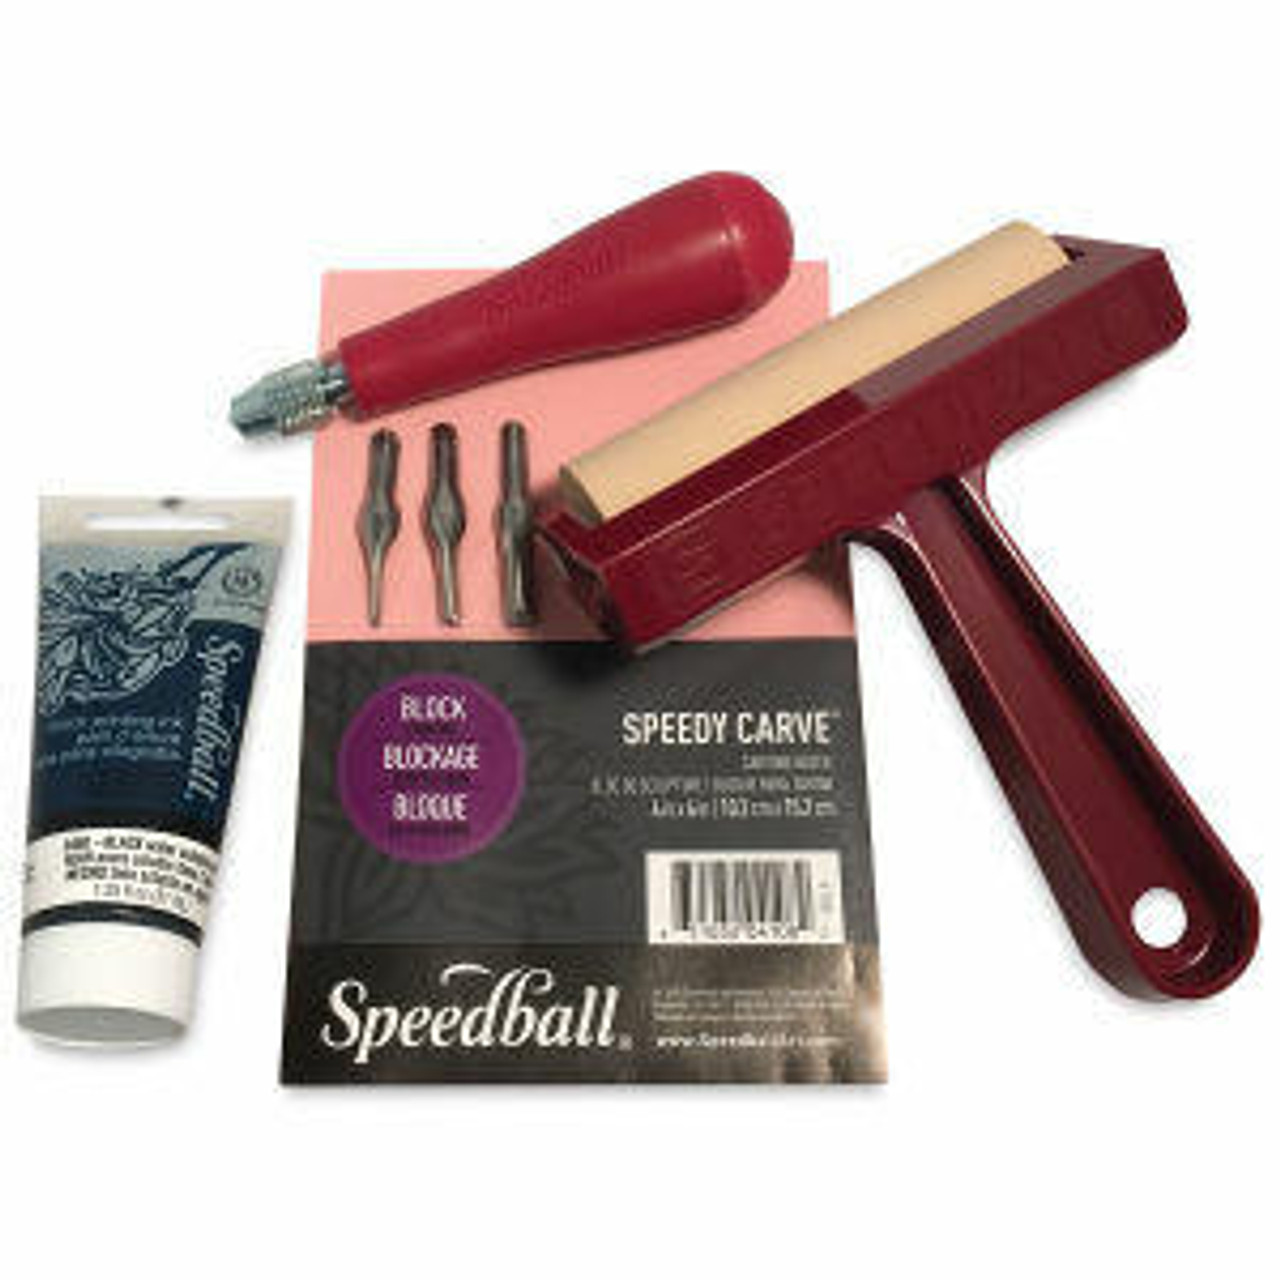 Speedball Intermediate Deluxe Screen Printing Kit